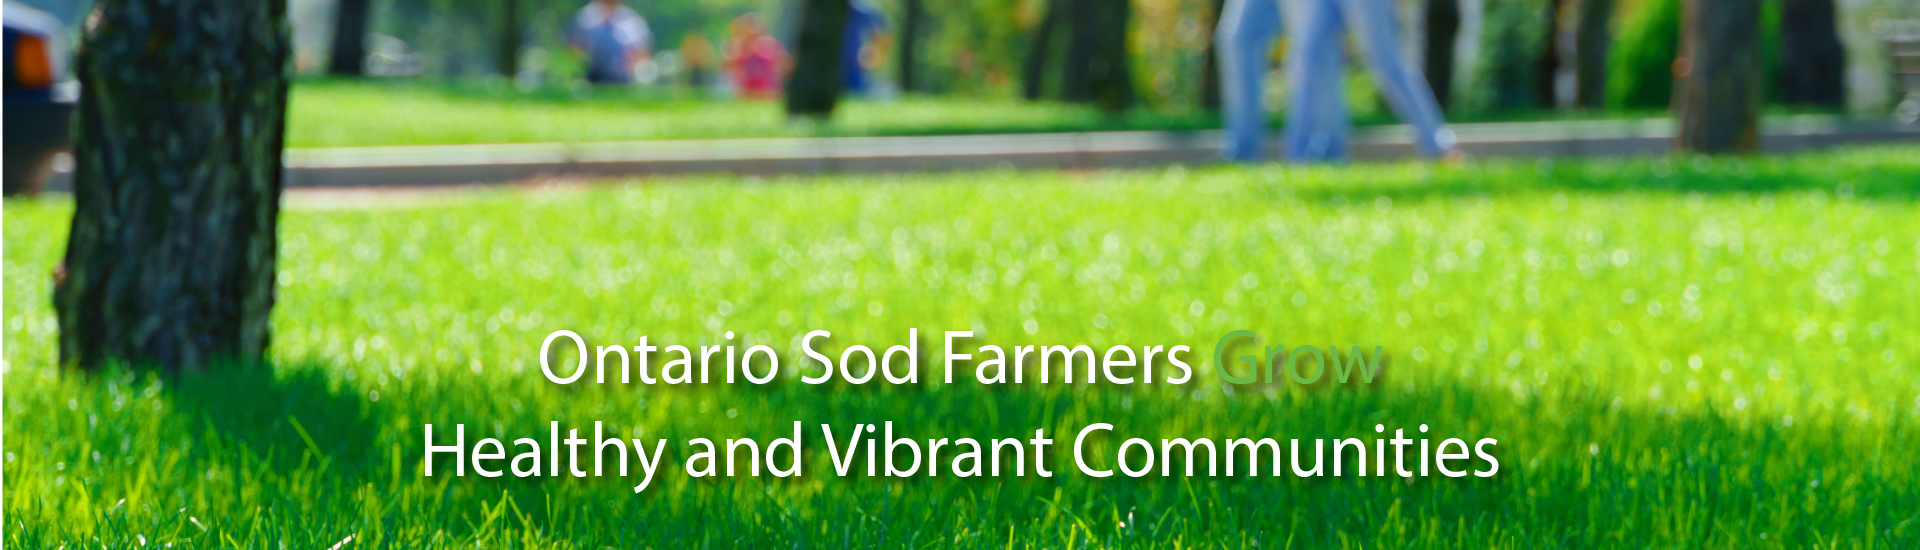 Ontario Sod Farmers Grow Healthy and Vibrant Communities